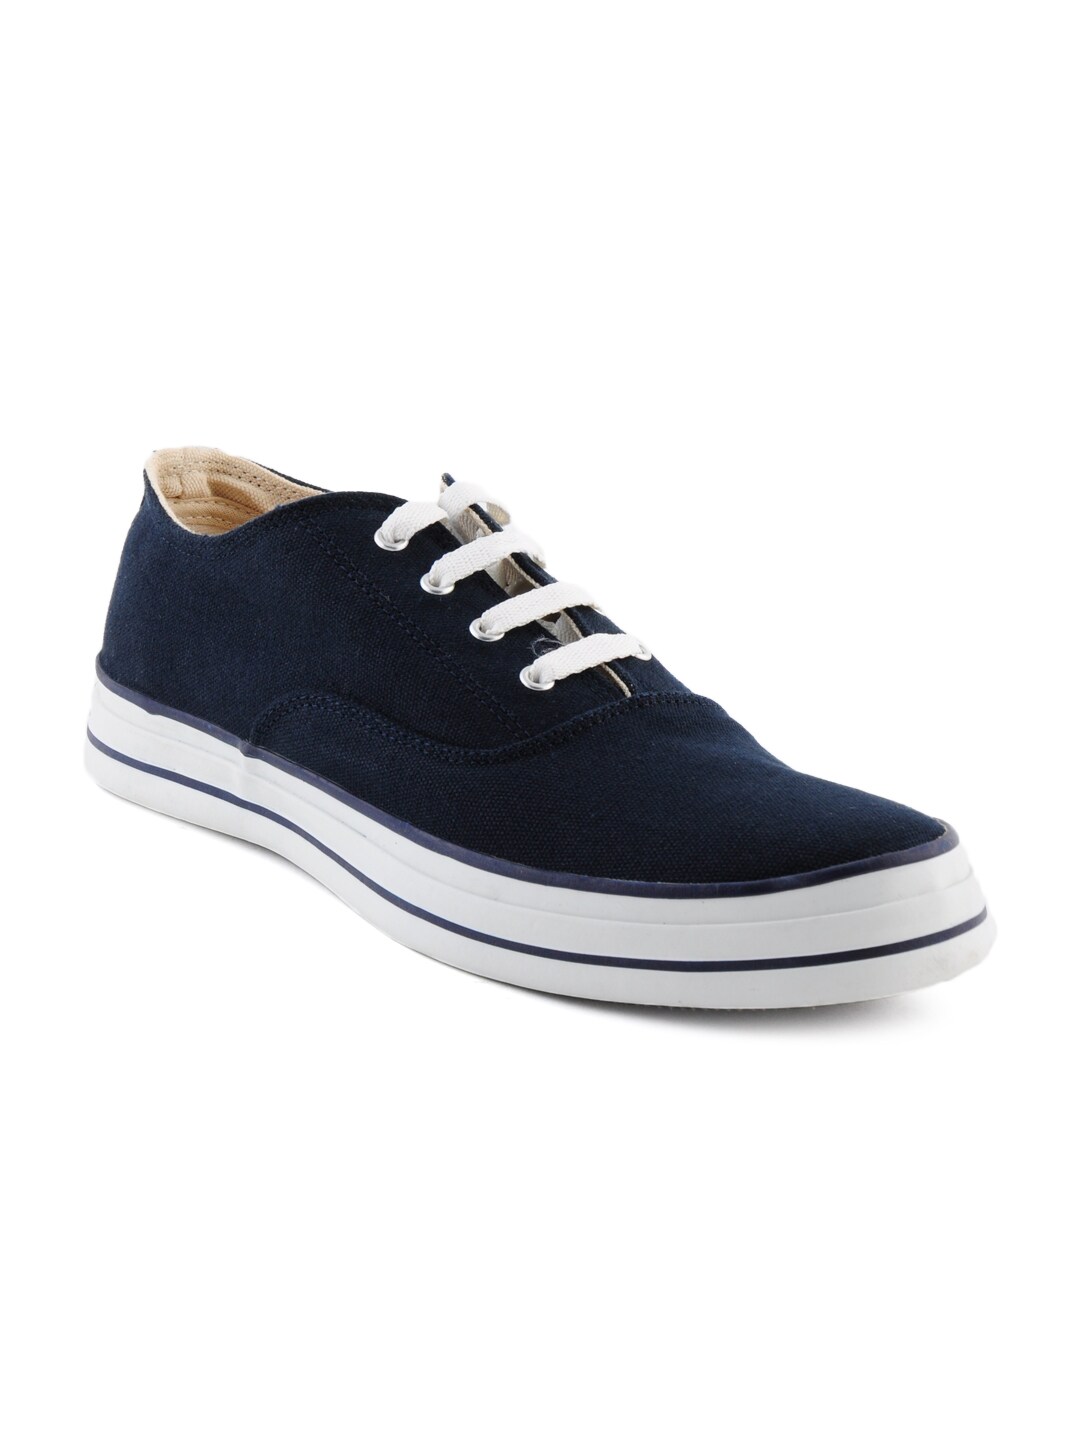 Converse Men Oxford Navy Blue Casual Shoes